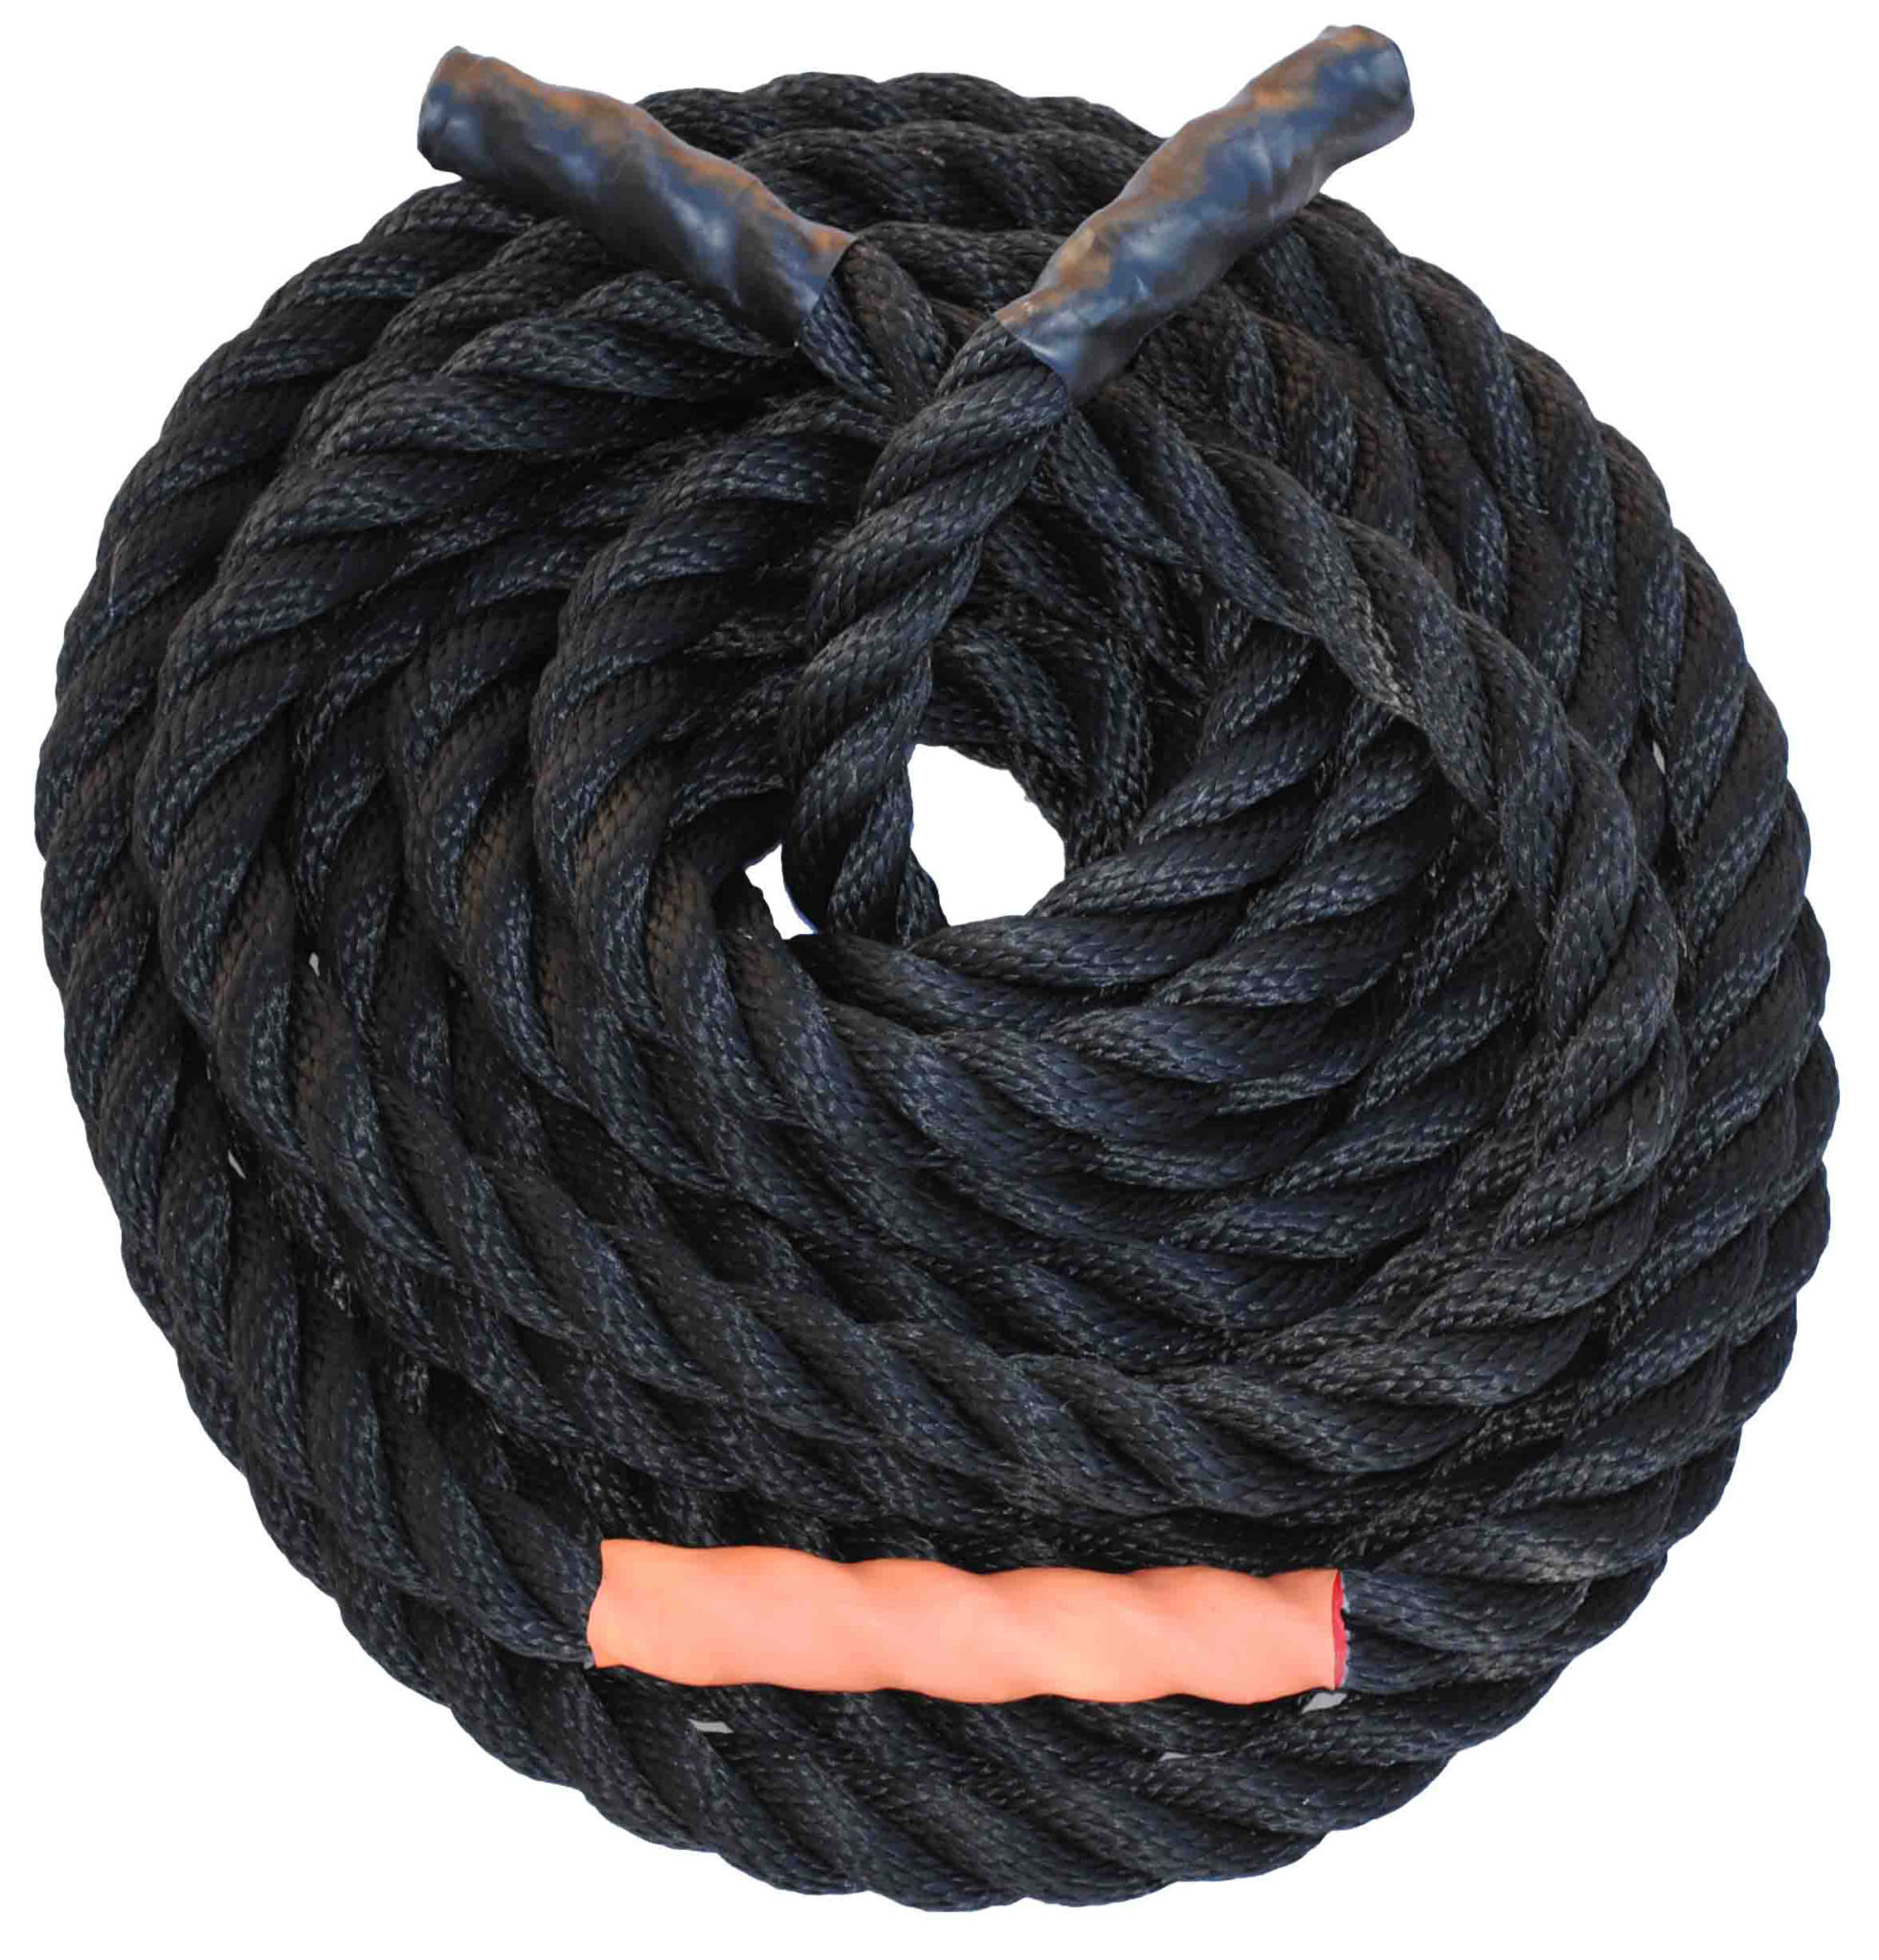 https://pacificfibre.com/wp-content/uploads/2015/12/Black-Nylon-Undulation-Rope-scaled-1.jpg